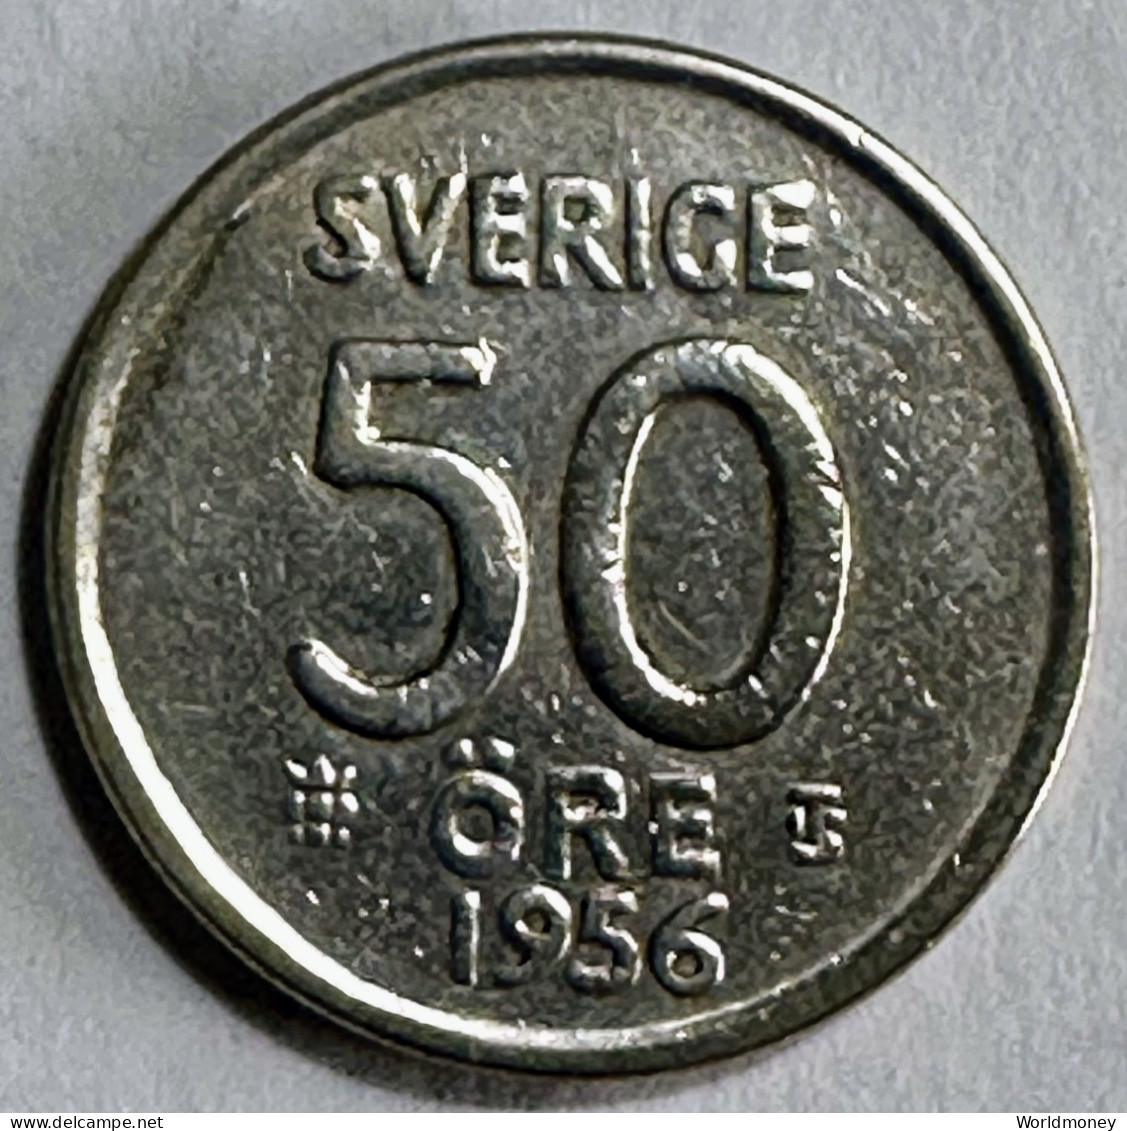 Sweden 50 Ore 1956 (Silver) - Sweden